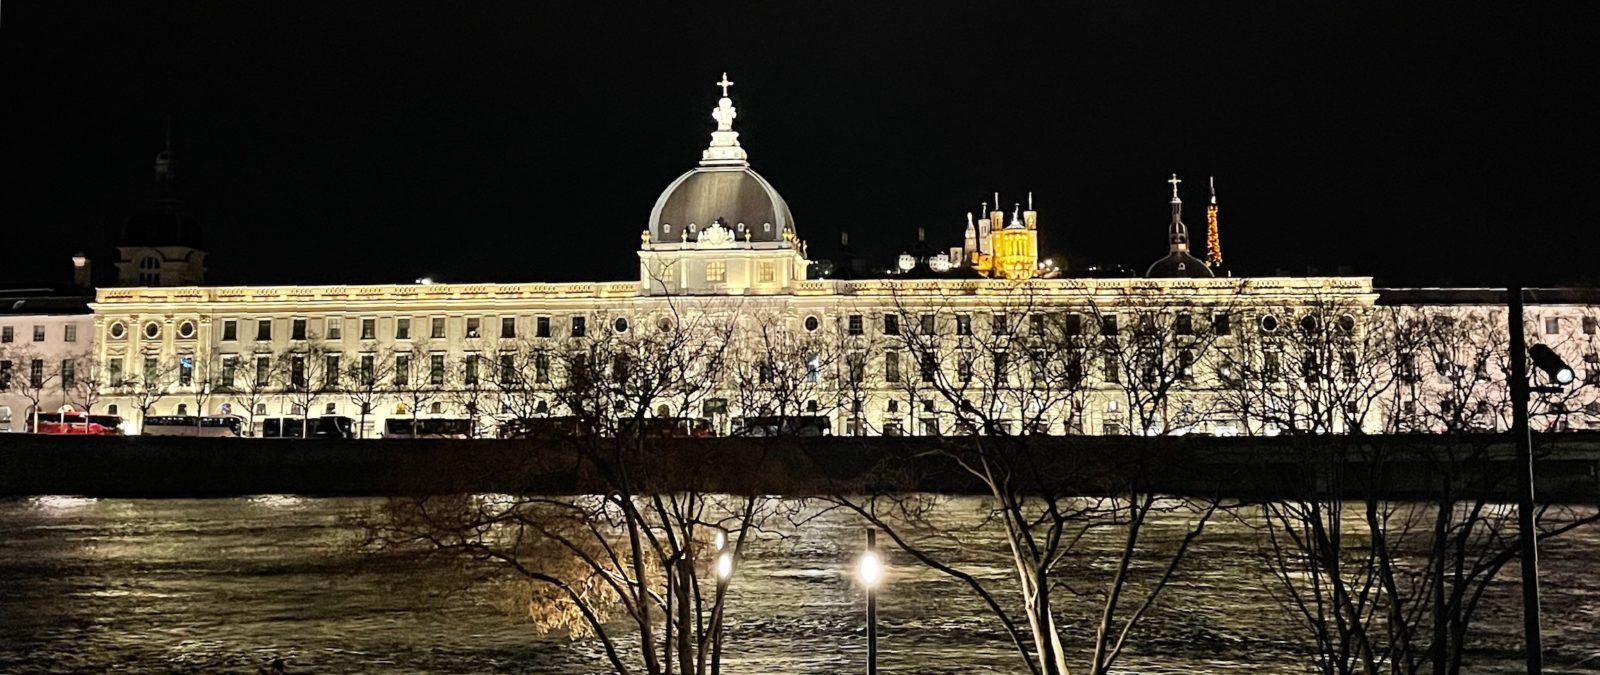 Lyon Grand Hôtel-Dieu vu de nuit (©fk) 